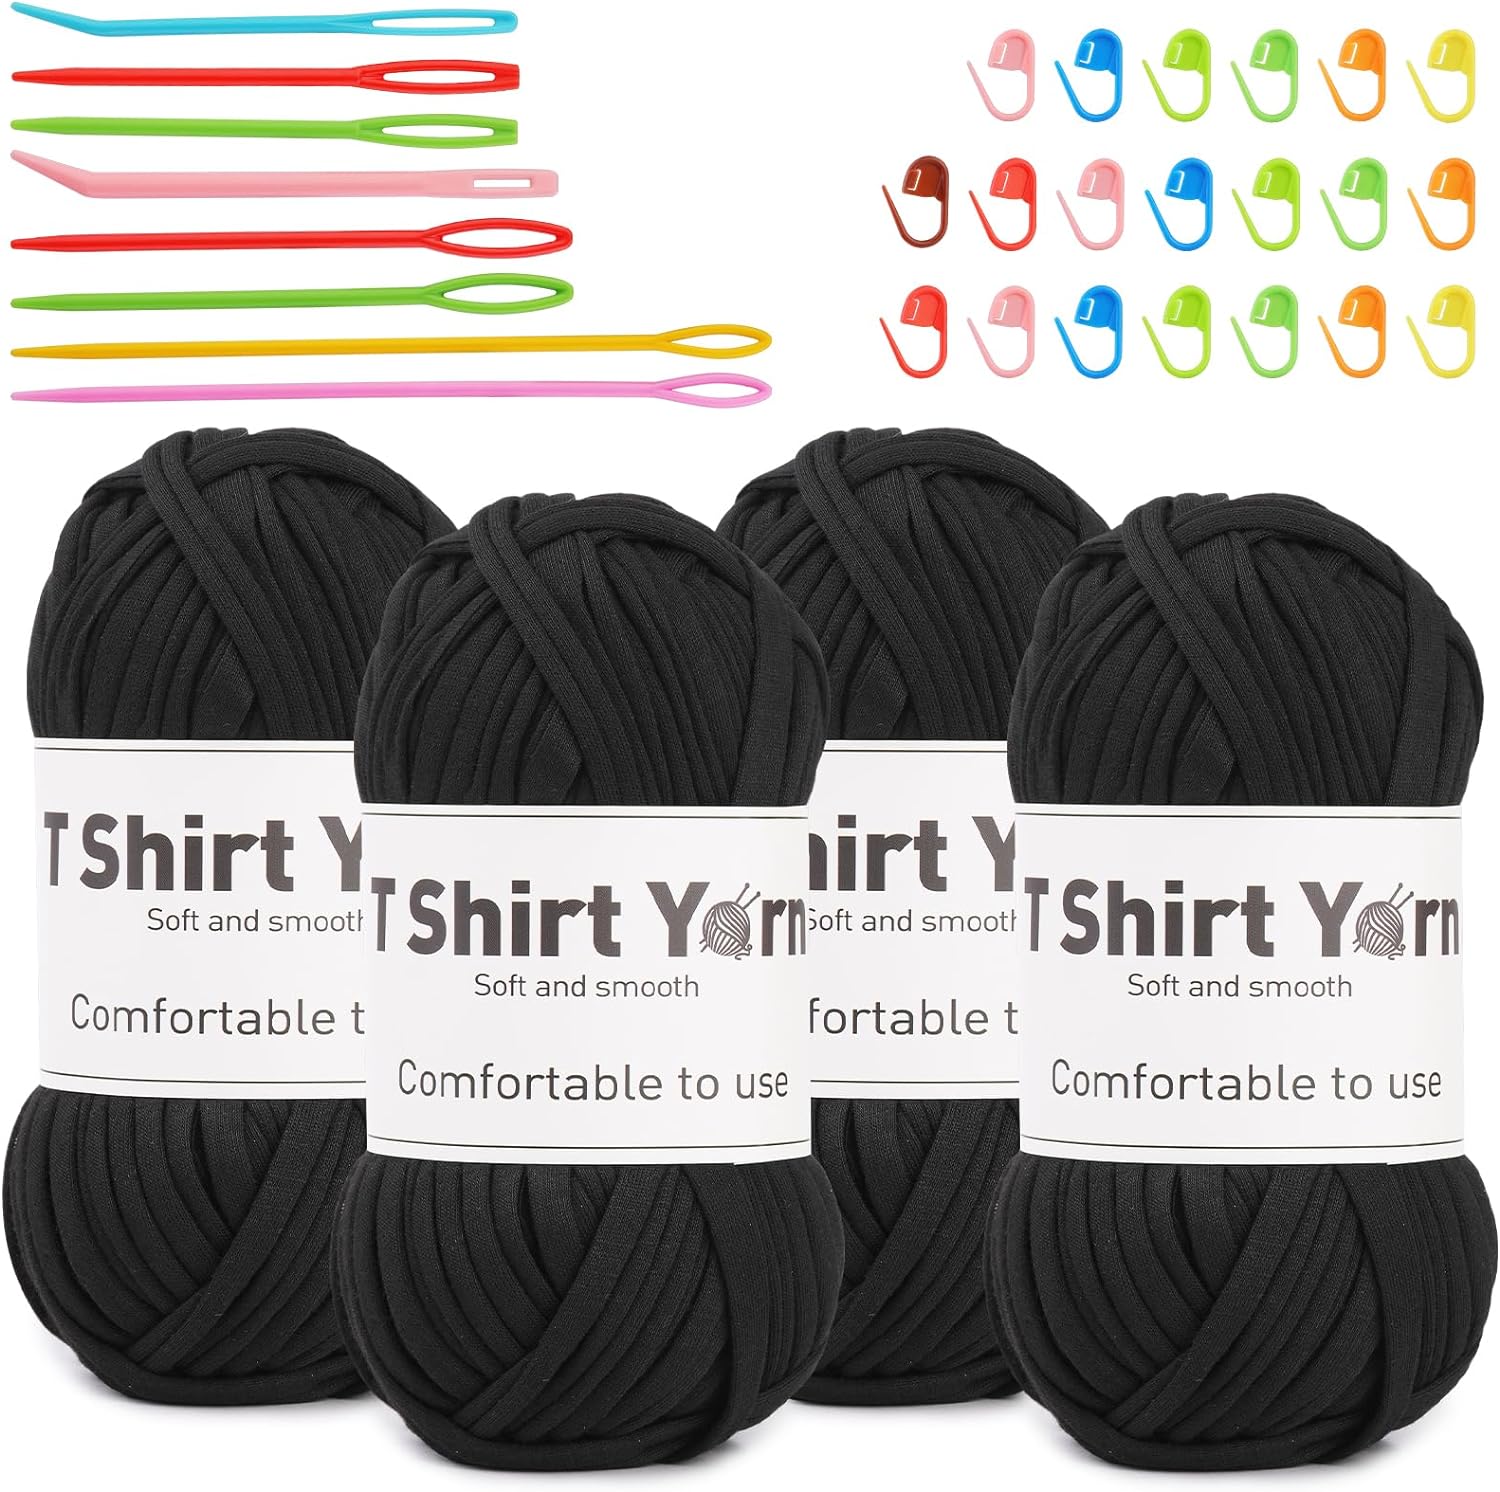  4x50g Yarn for Crocheting and Knitting, Easy Yarn